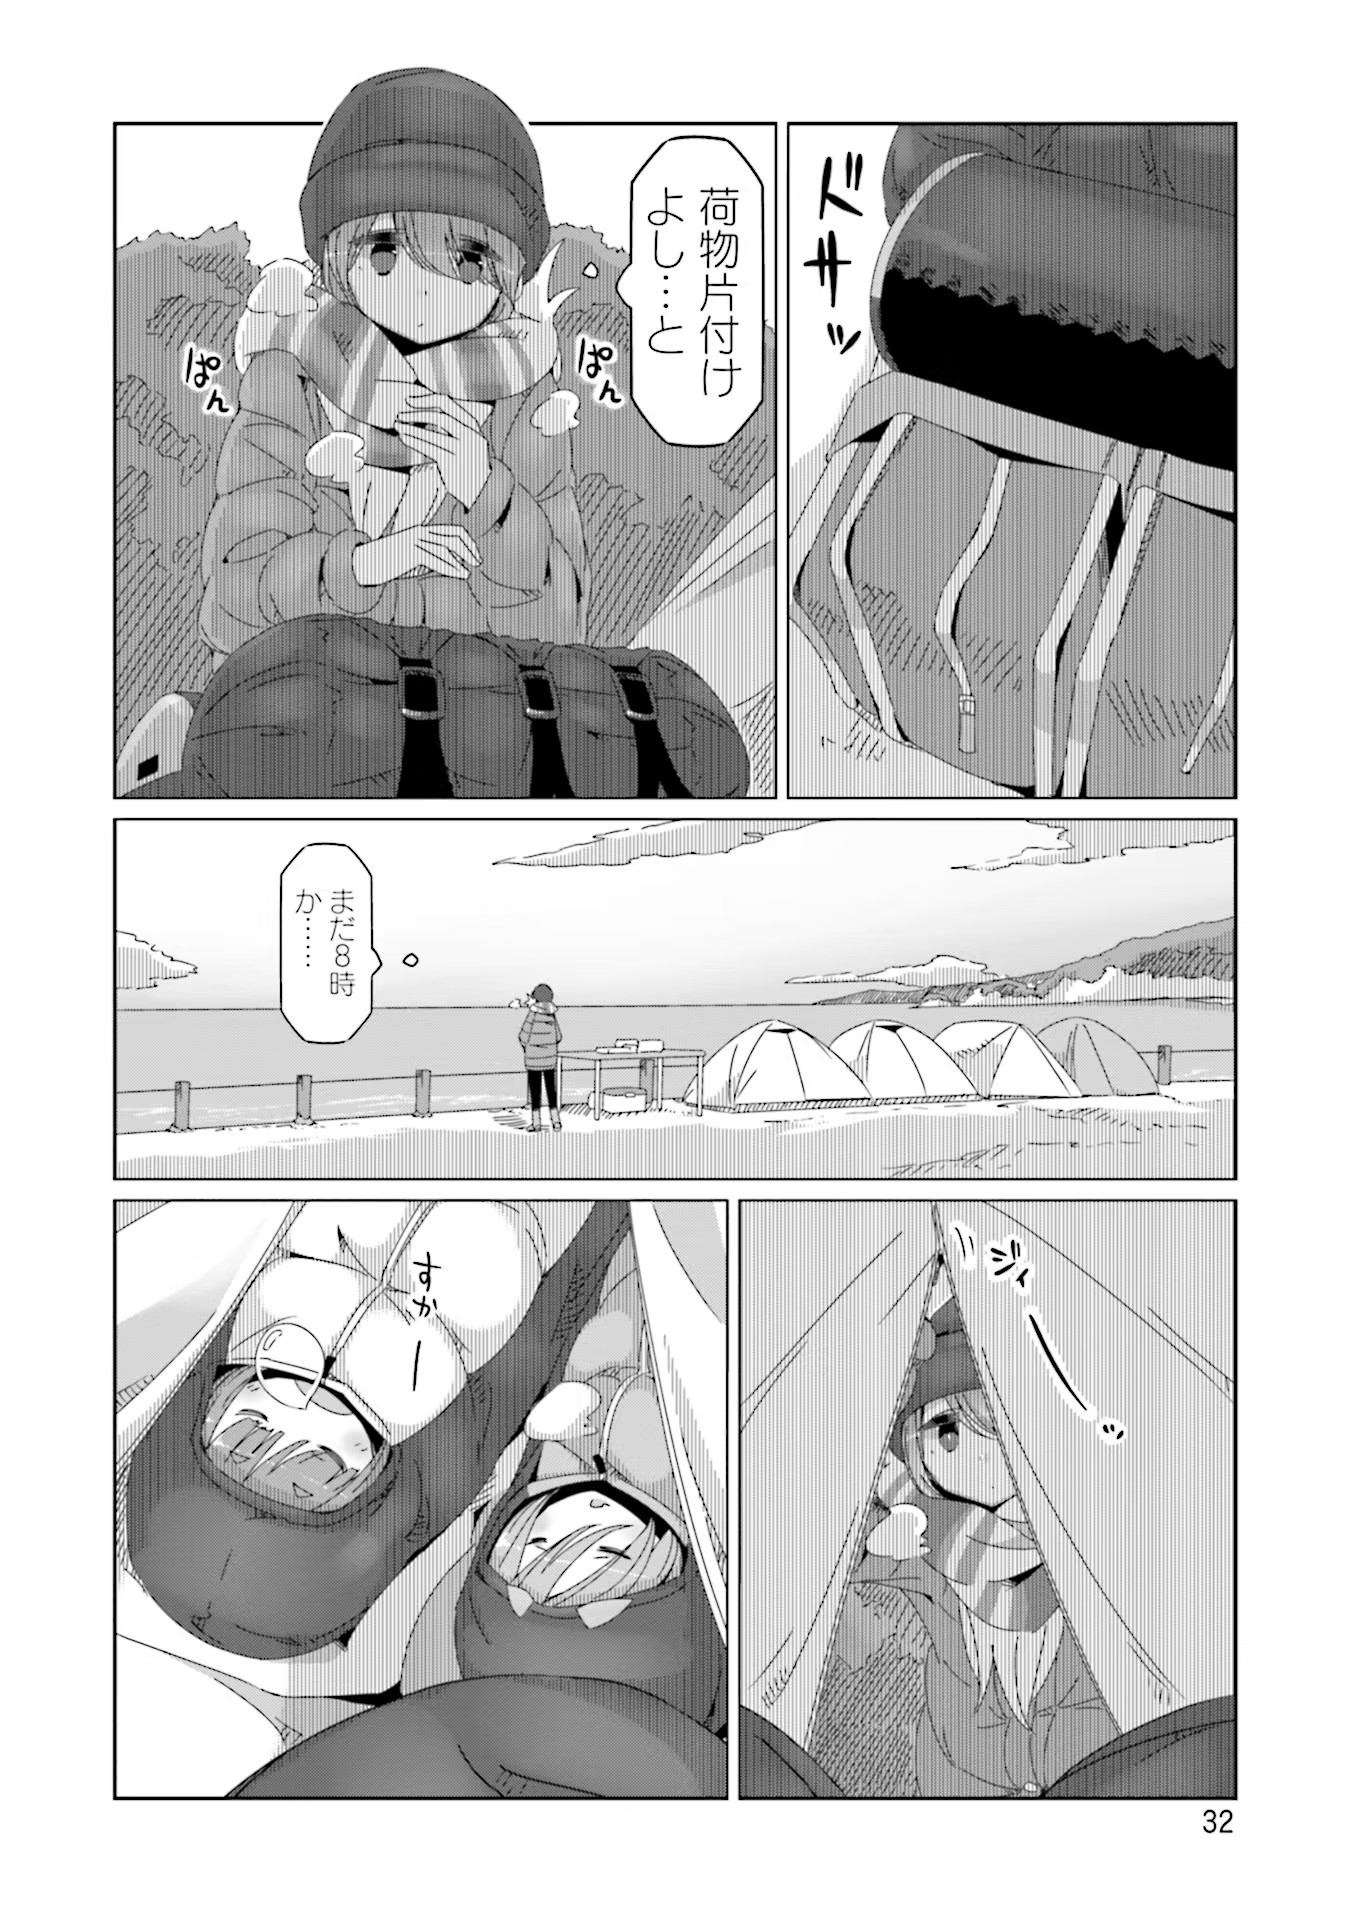 Yuru Camp - Chapter 48 - Page 4